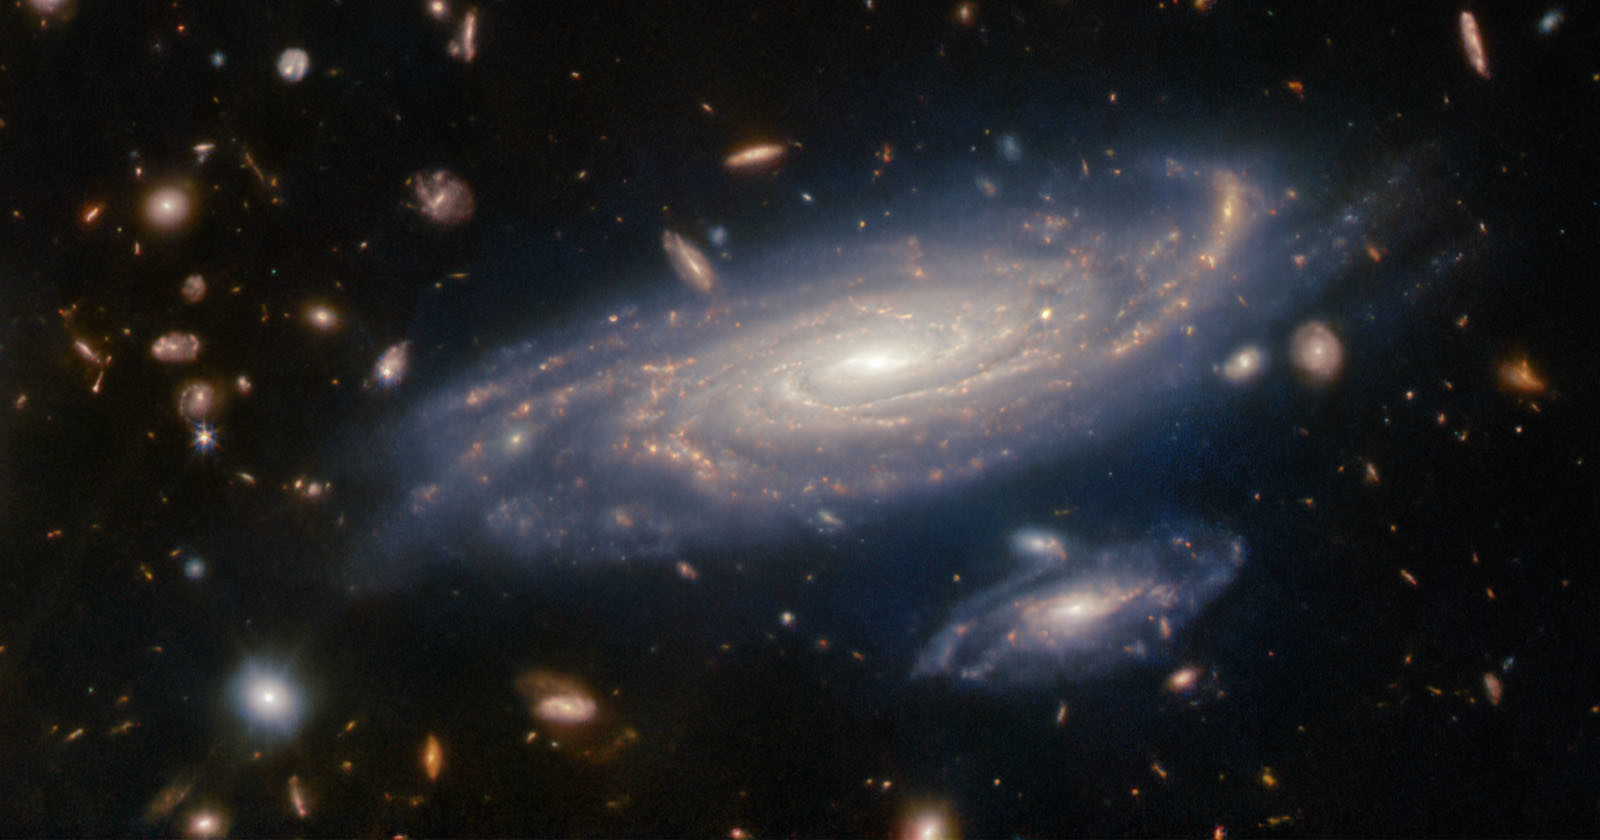 Webb Telescope Photographs a Milky Way-Like Spiral Galaxy